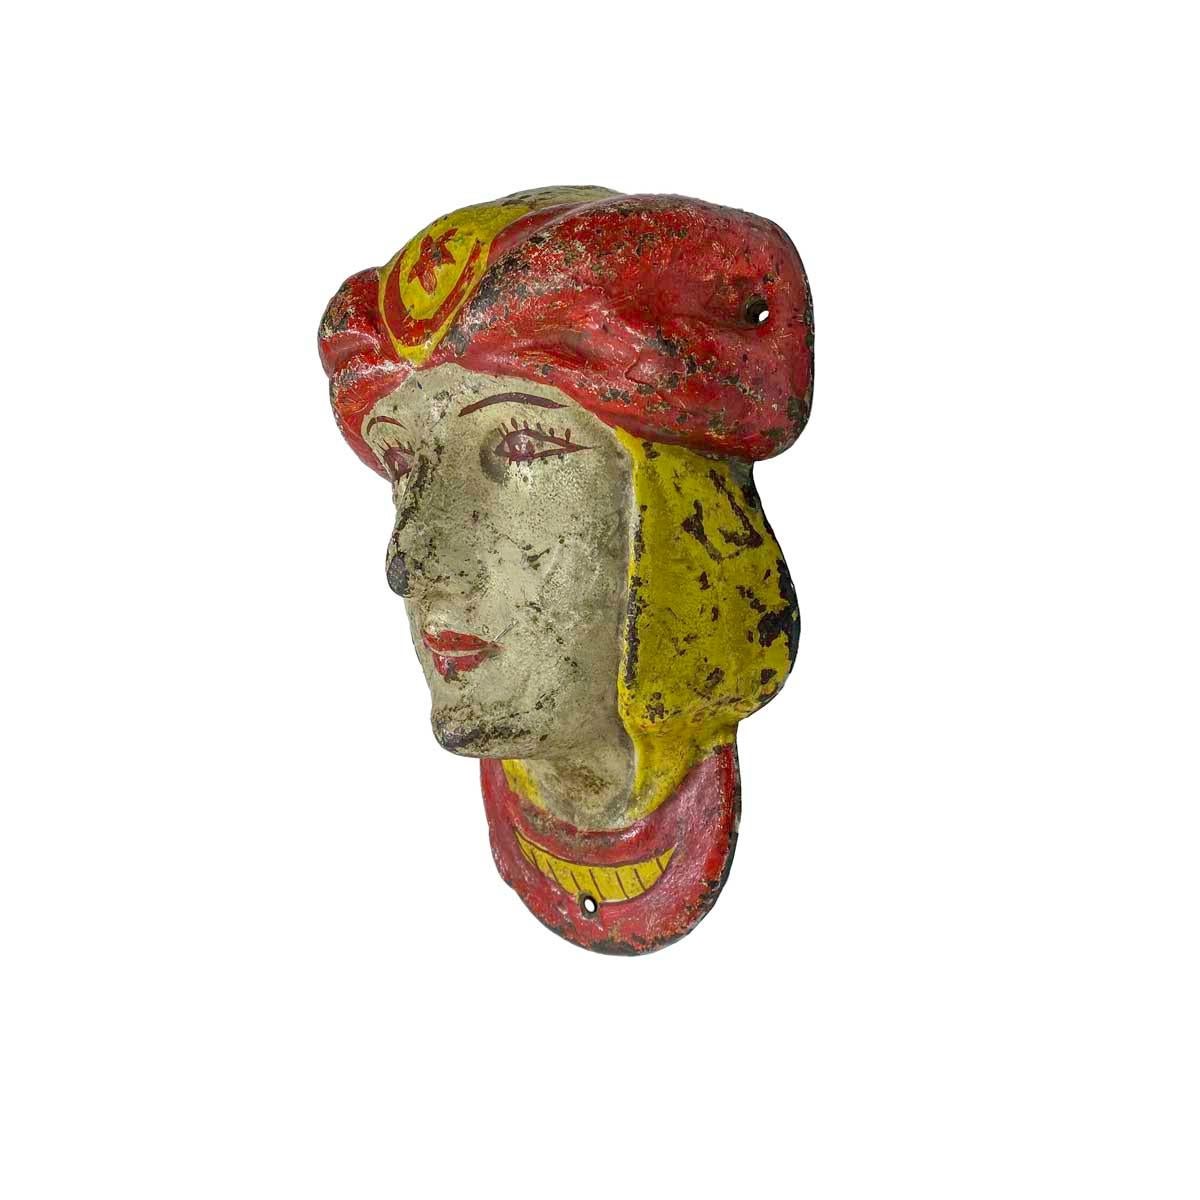 Folk Art Cast-iron Carousel Ornament of a Woman in a Turban